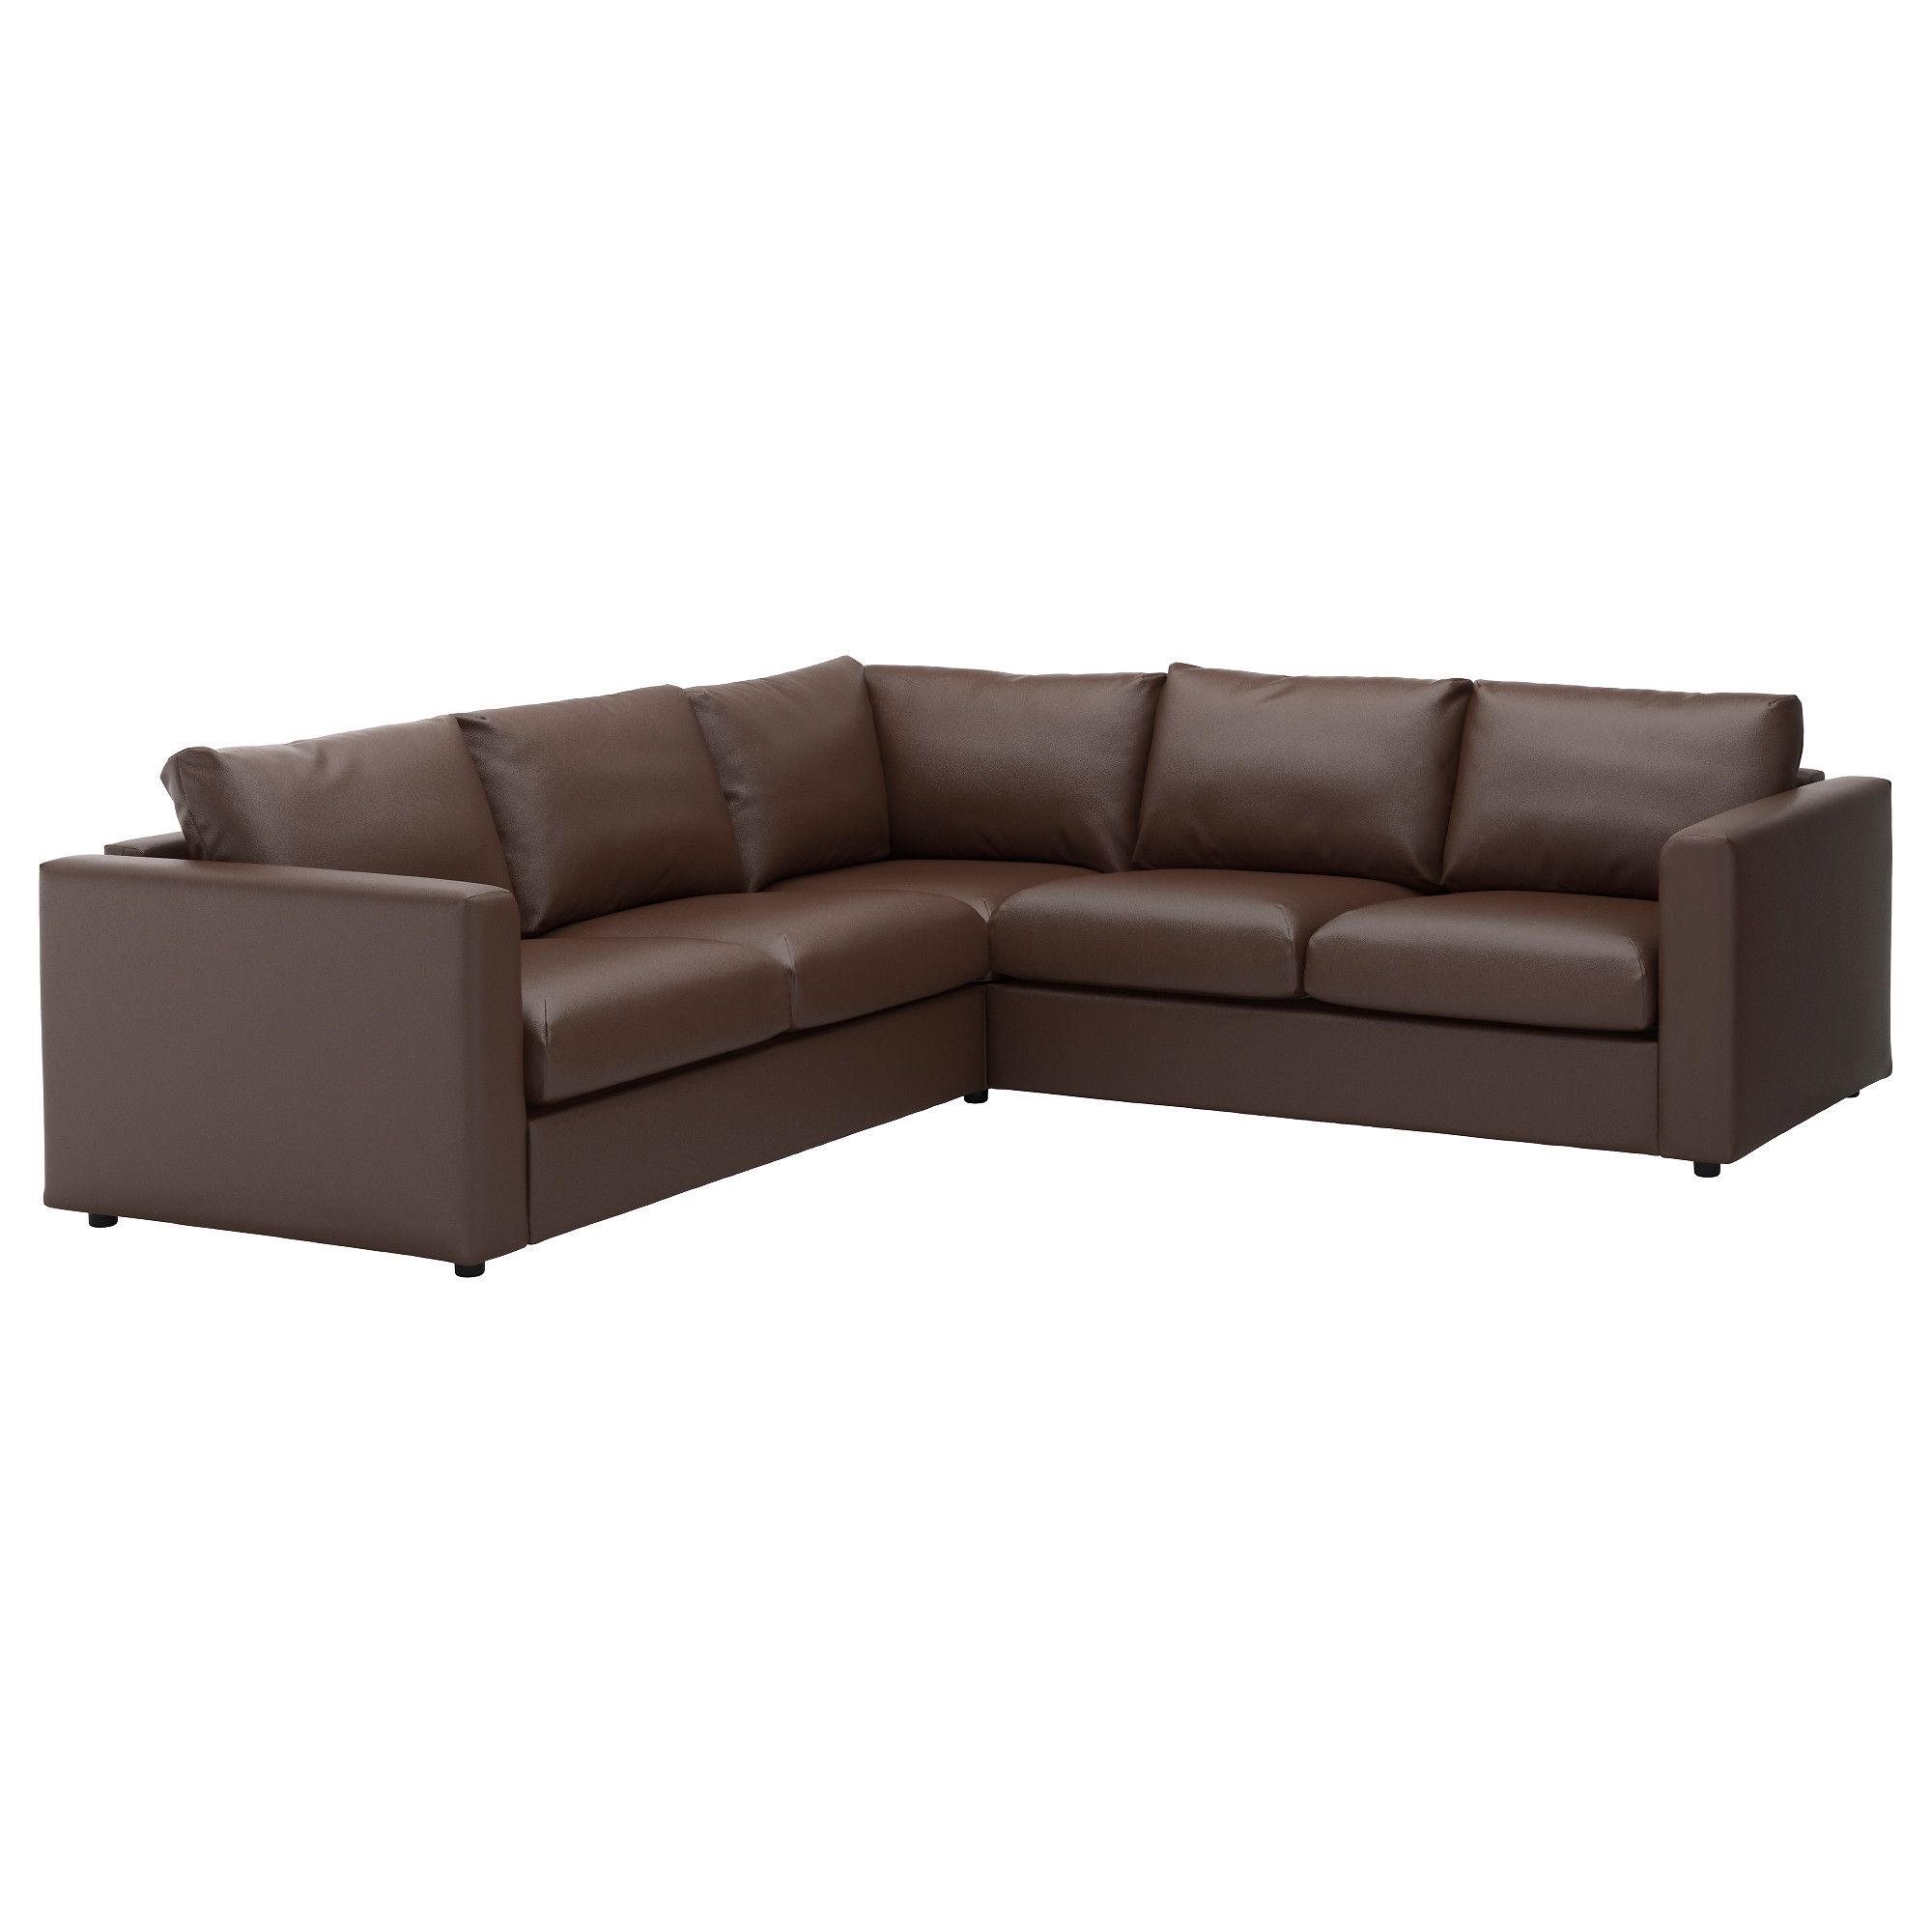 Vimle Corner Sofa 4 Seat Farsta Dark Brown Ikea For 4 Seat Couch (View 4 of 15)